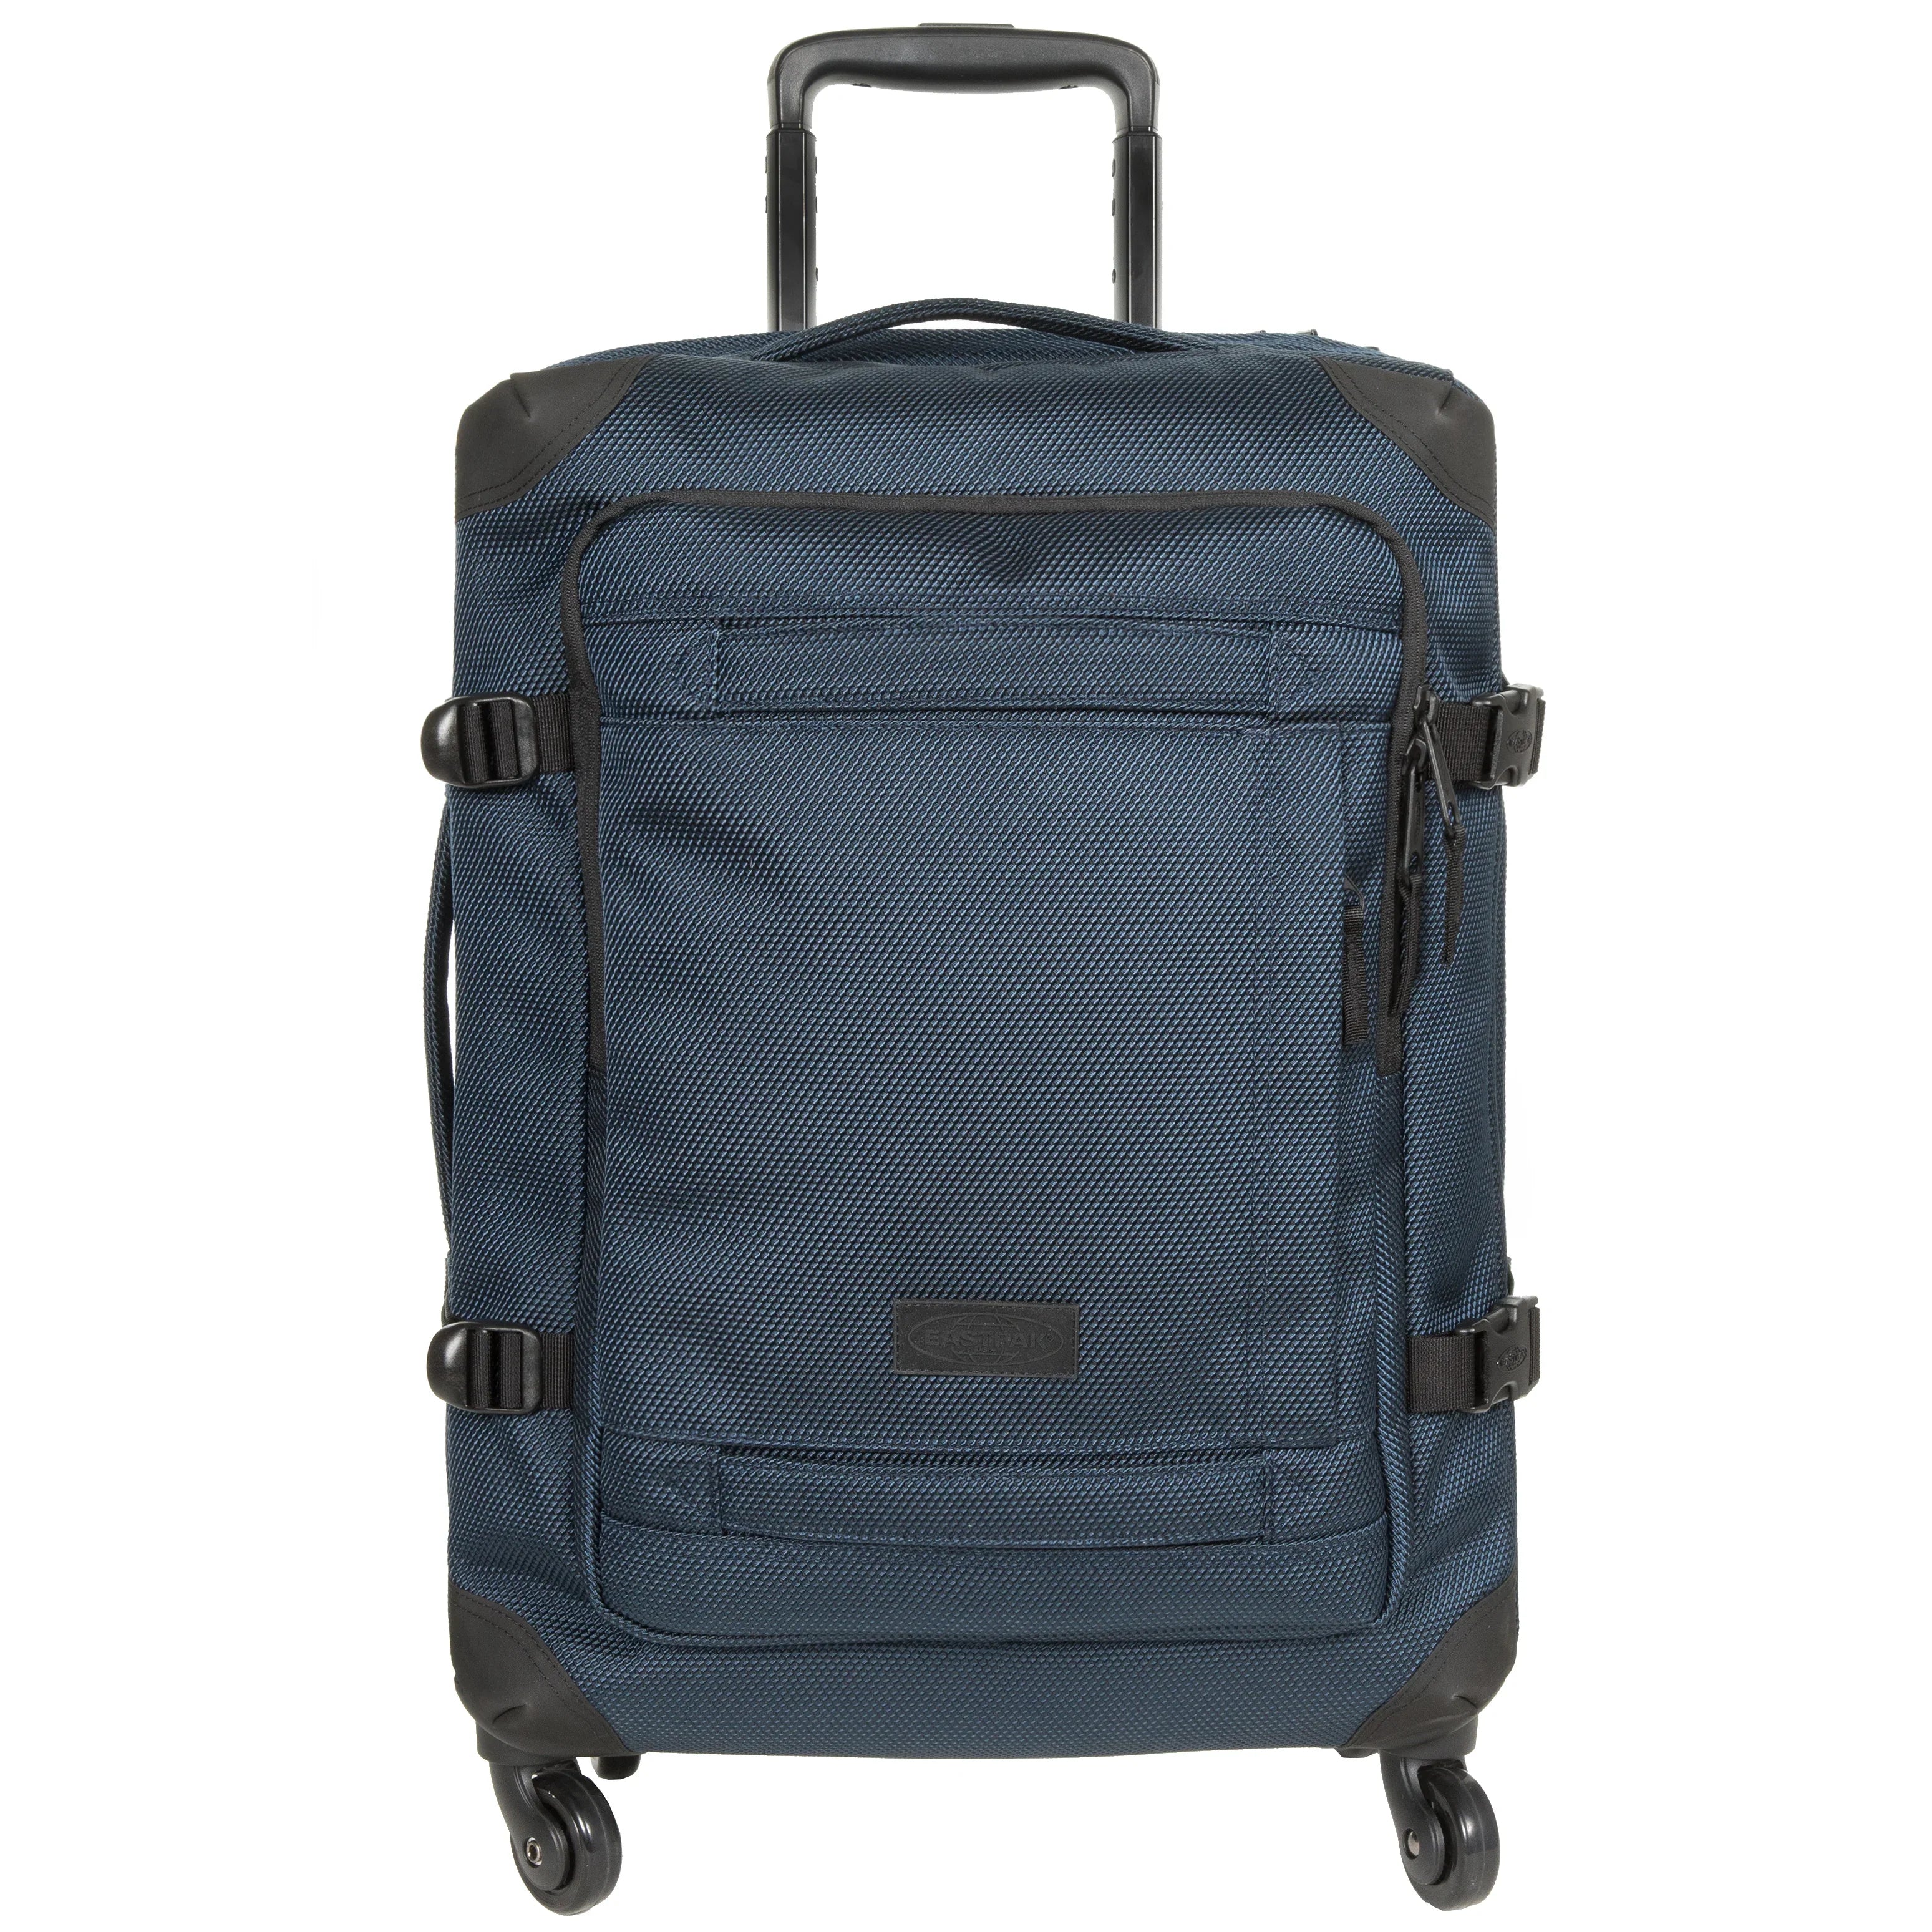 Eastpak Authentic Travel Trans4 CNNCT Rolling Travel Bag 55 cm - Cnnct Khaki